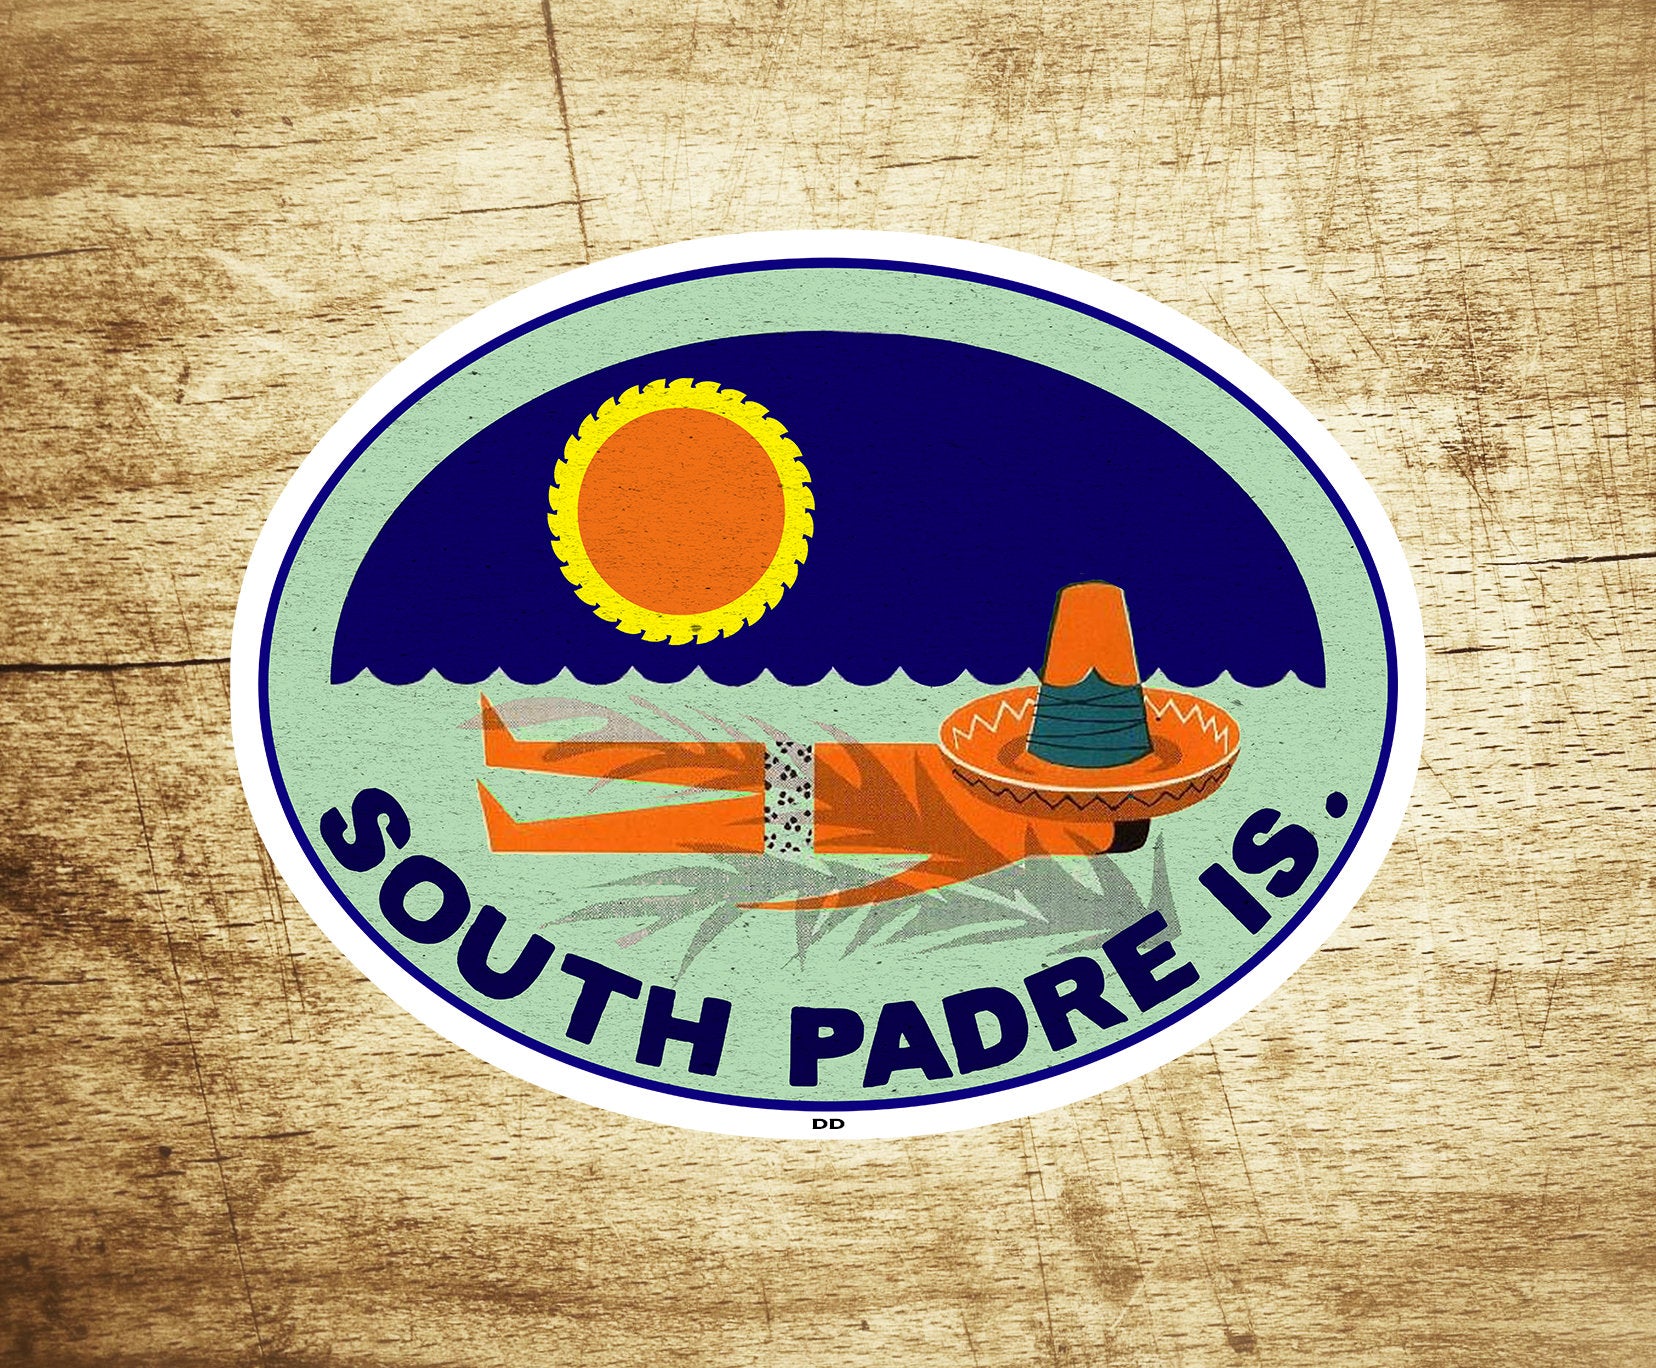 South Padre Island Texas Vintage Travel Sticker Decal 3 7/8" Lonestar Laptop Bumper